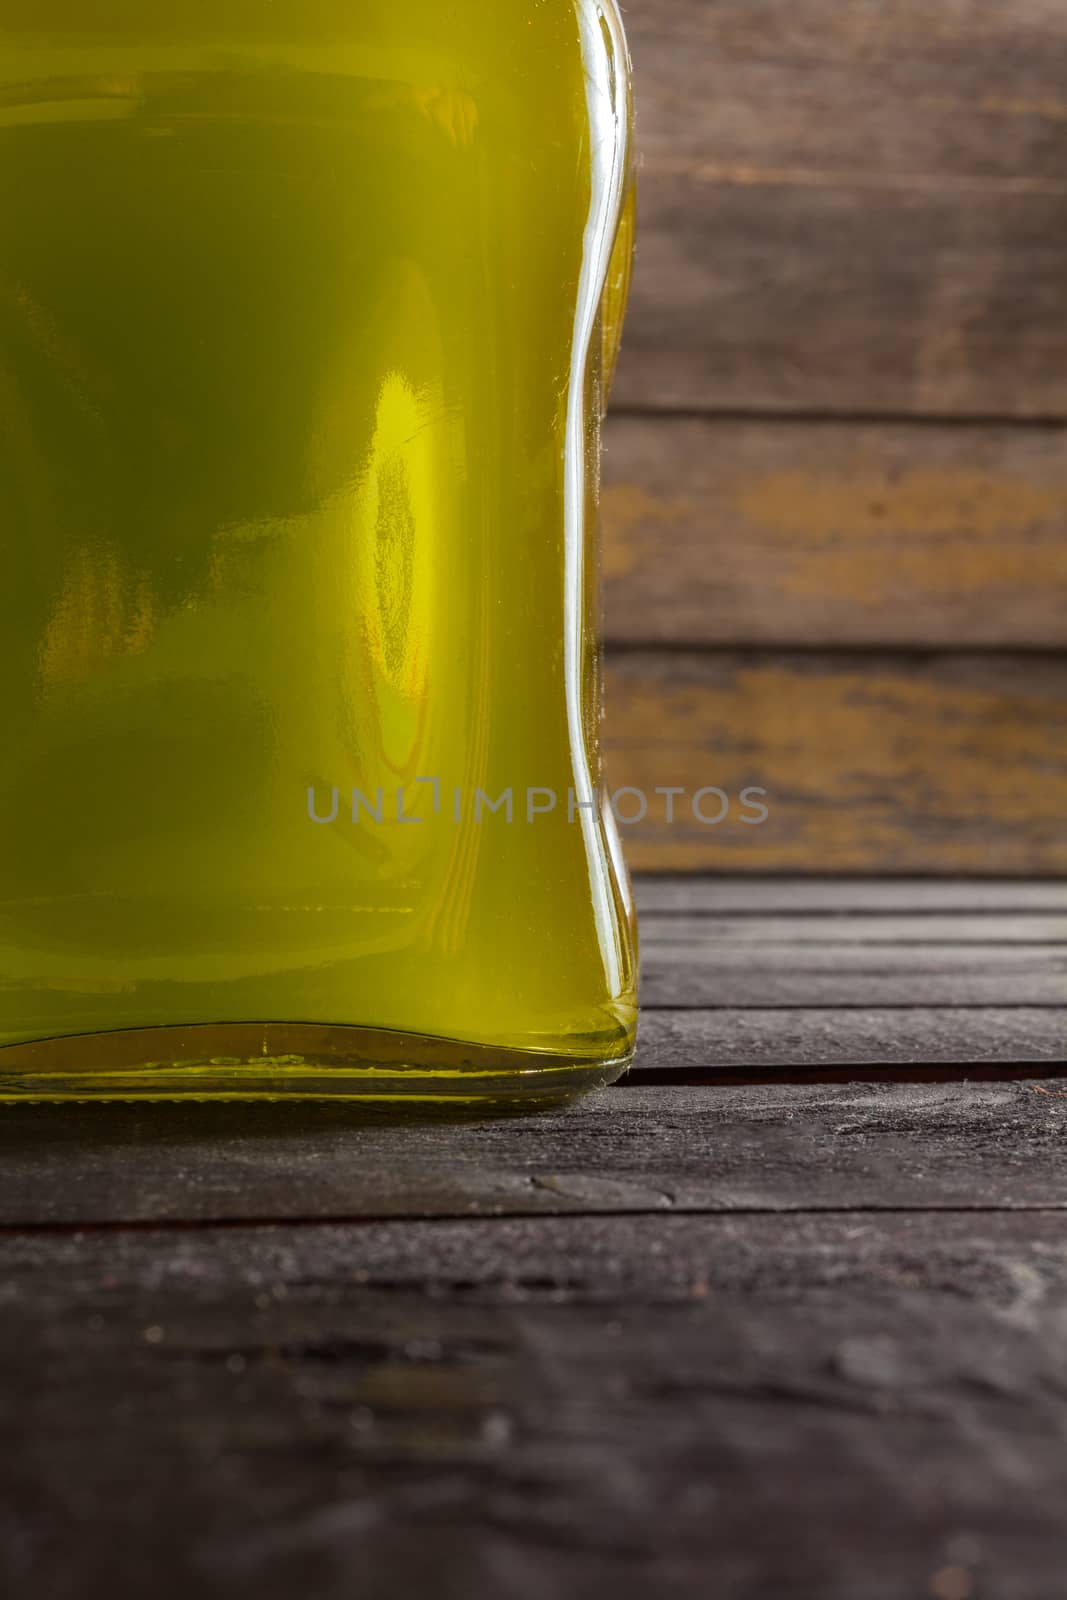 Olive oil bottle by Portokalis